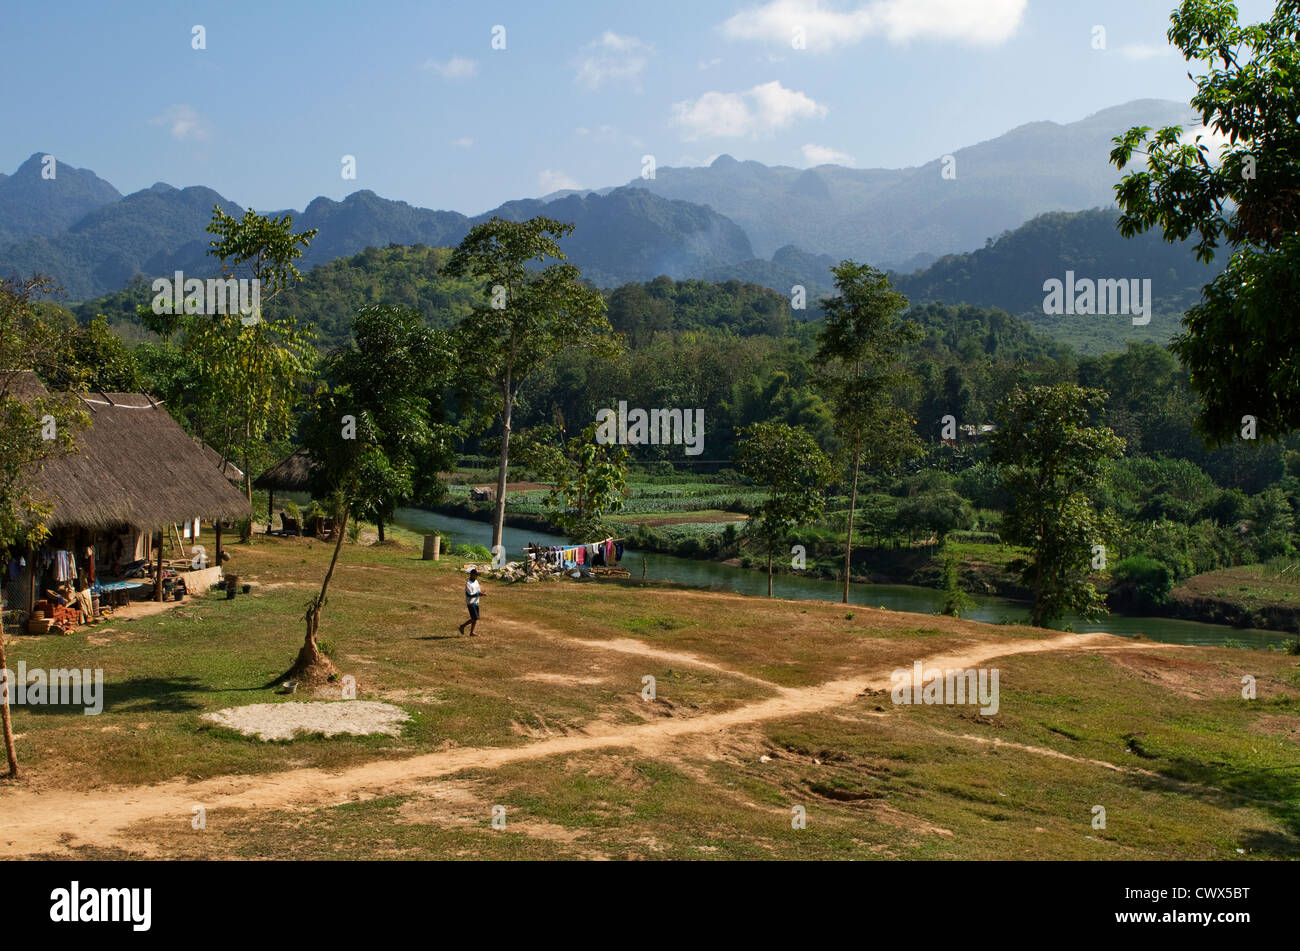 Mountain View desde las colinas de rural Laung Prabang, Laos, República Democrática Popular Lao, Sudeste de Asia Foto de stock